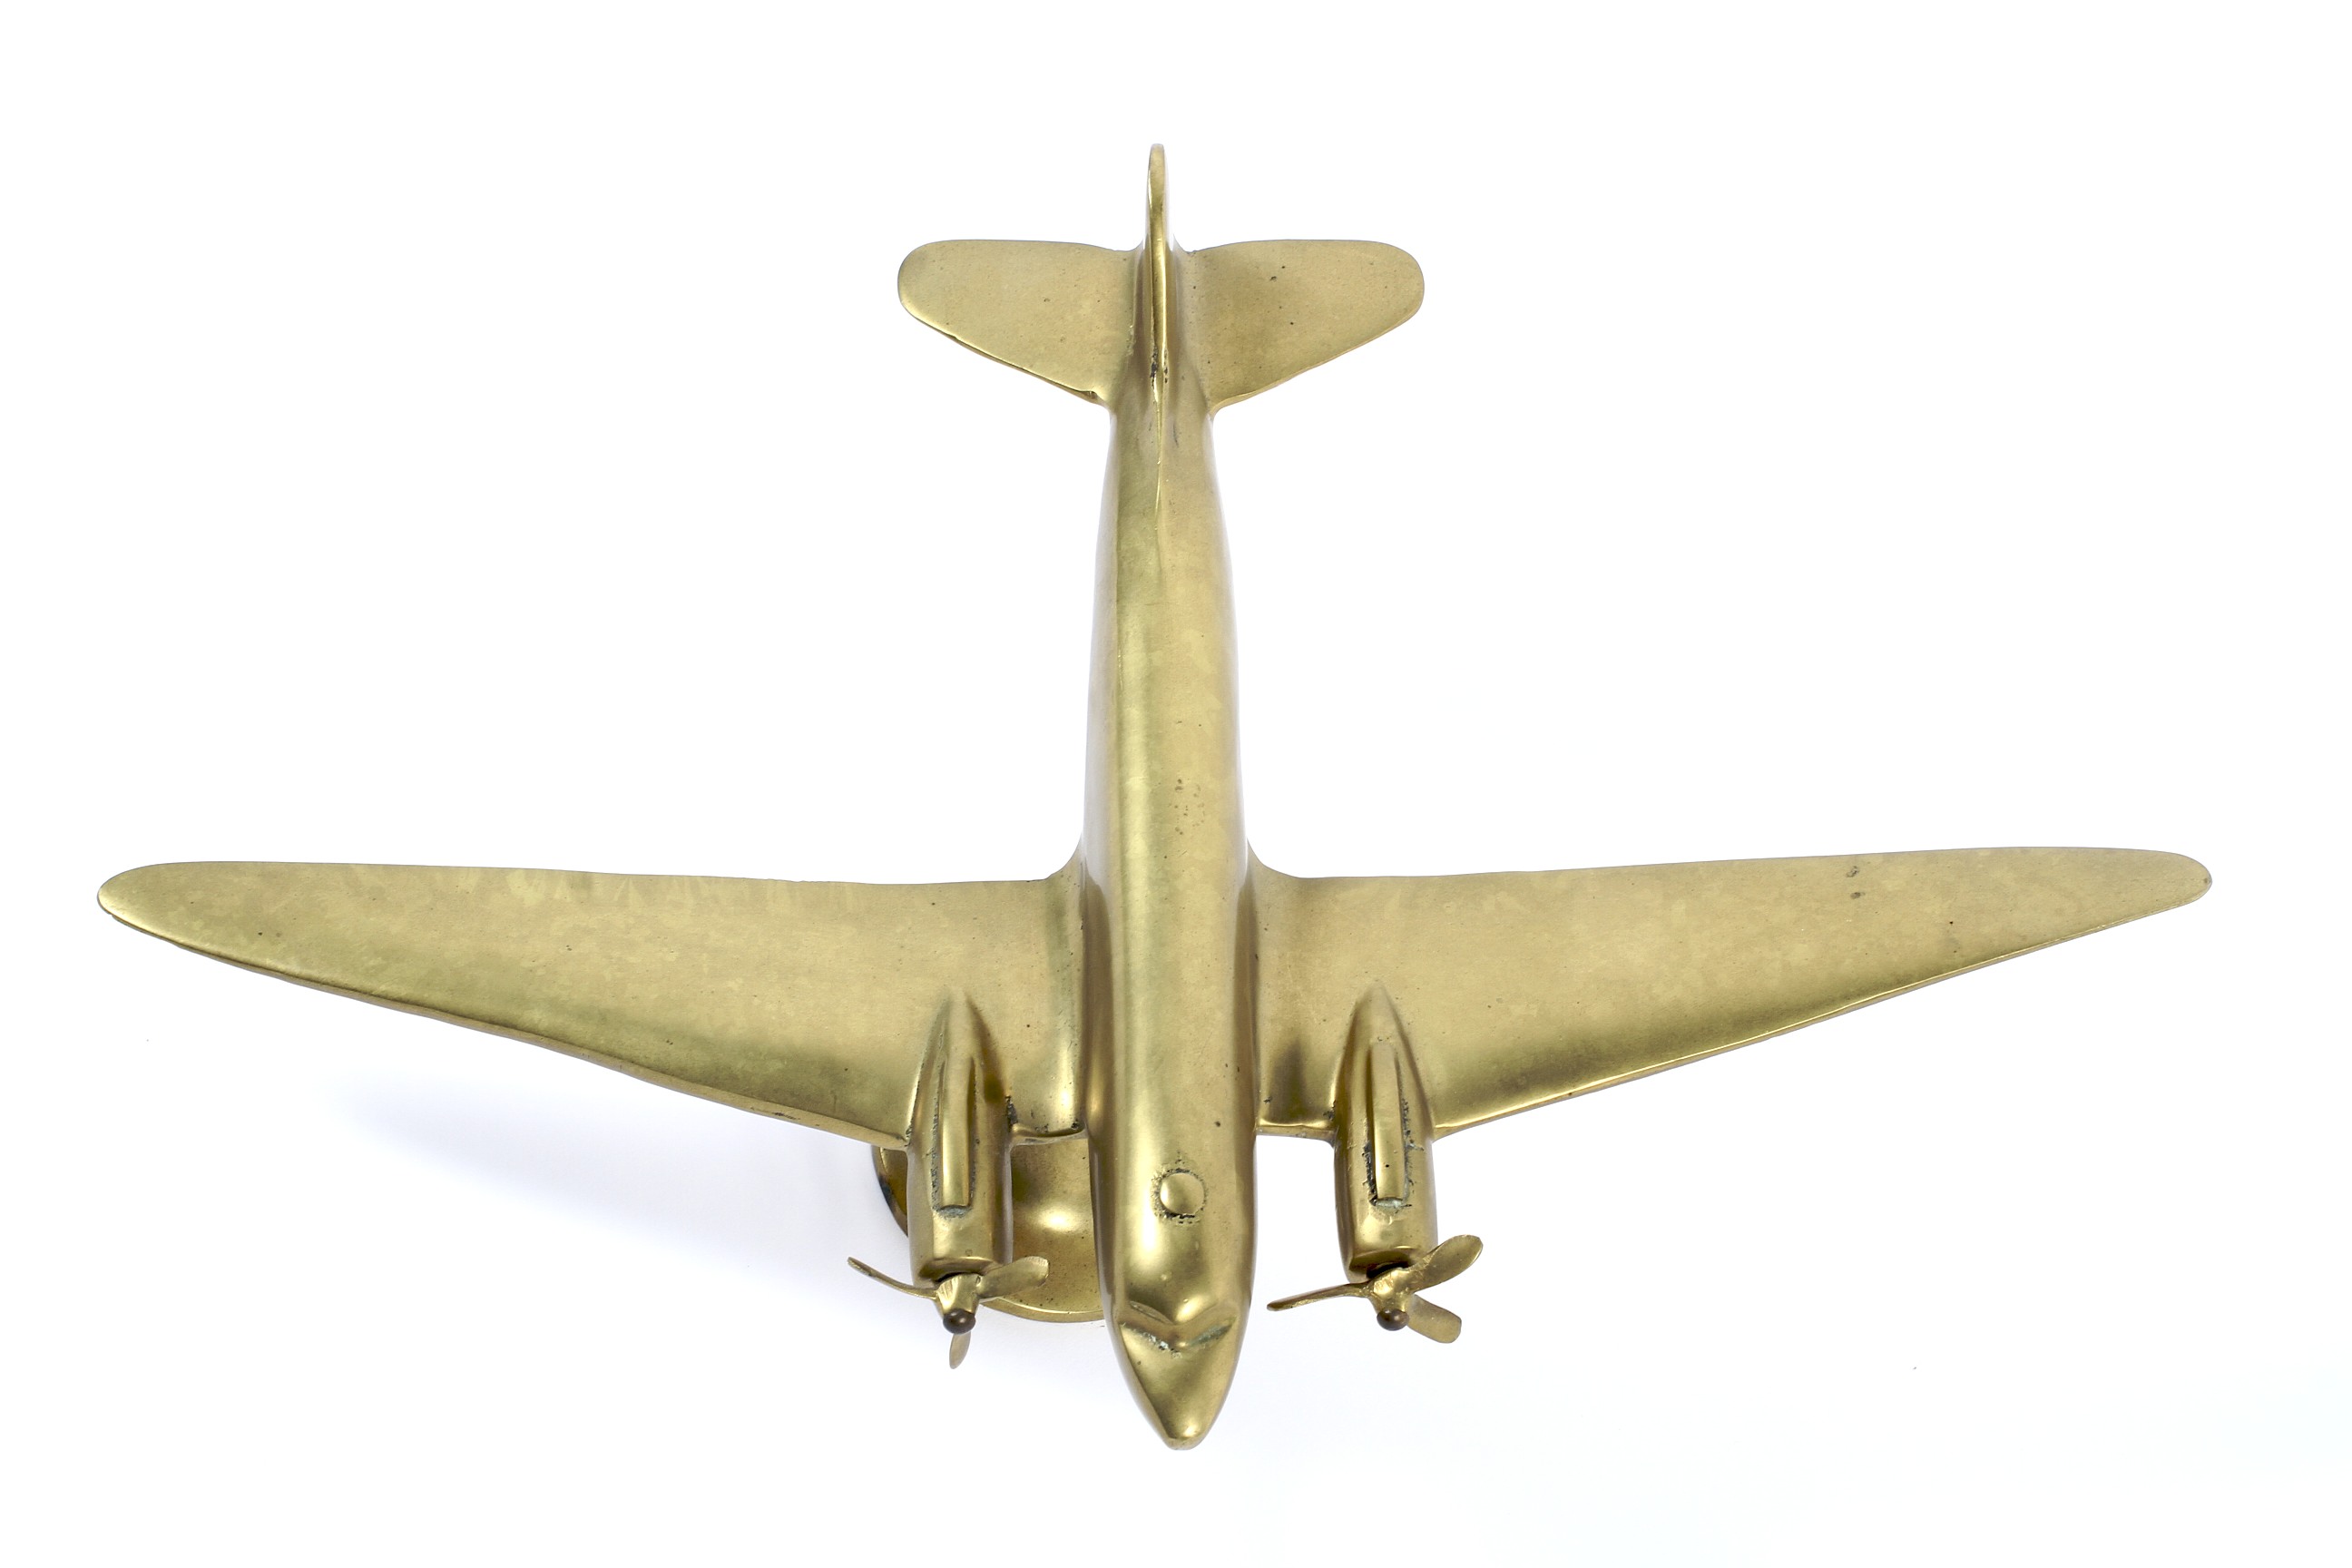 A brass retro model of a plane, - Image 2 of 3